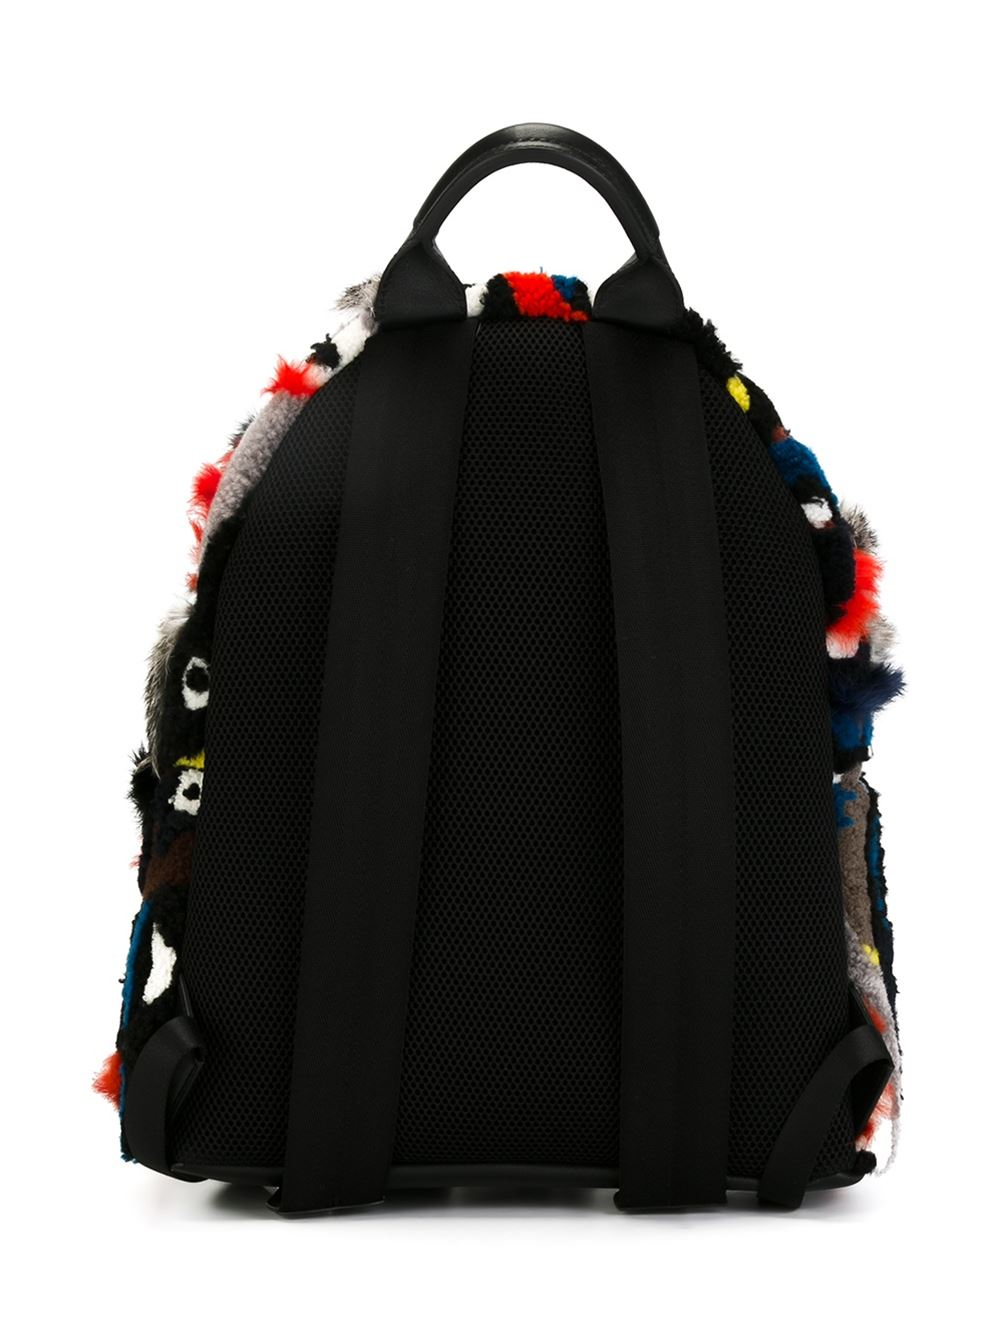 Lyst - Fendi Bag Bugs Backpack in Black for Men